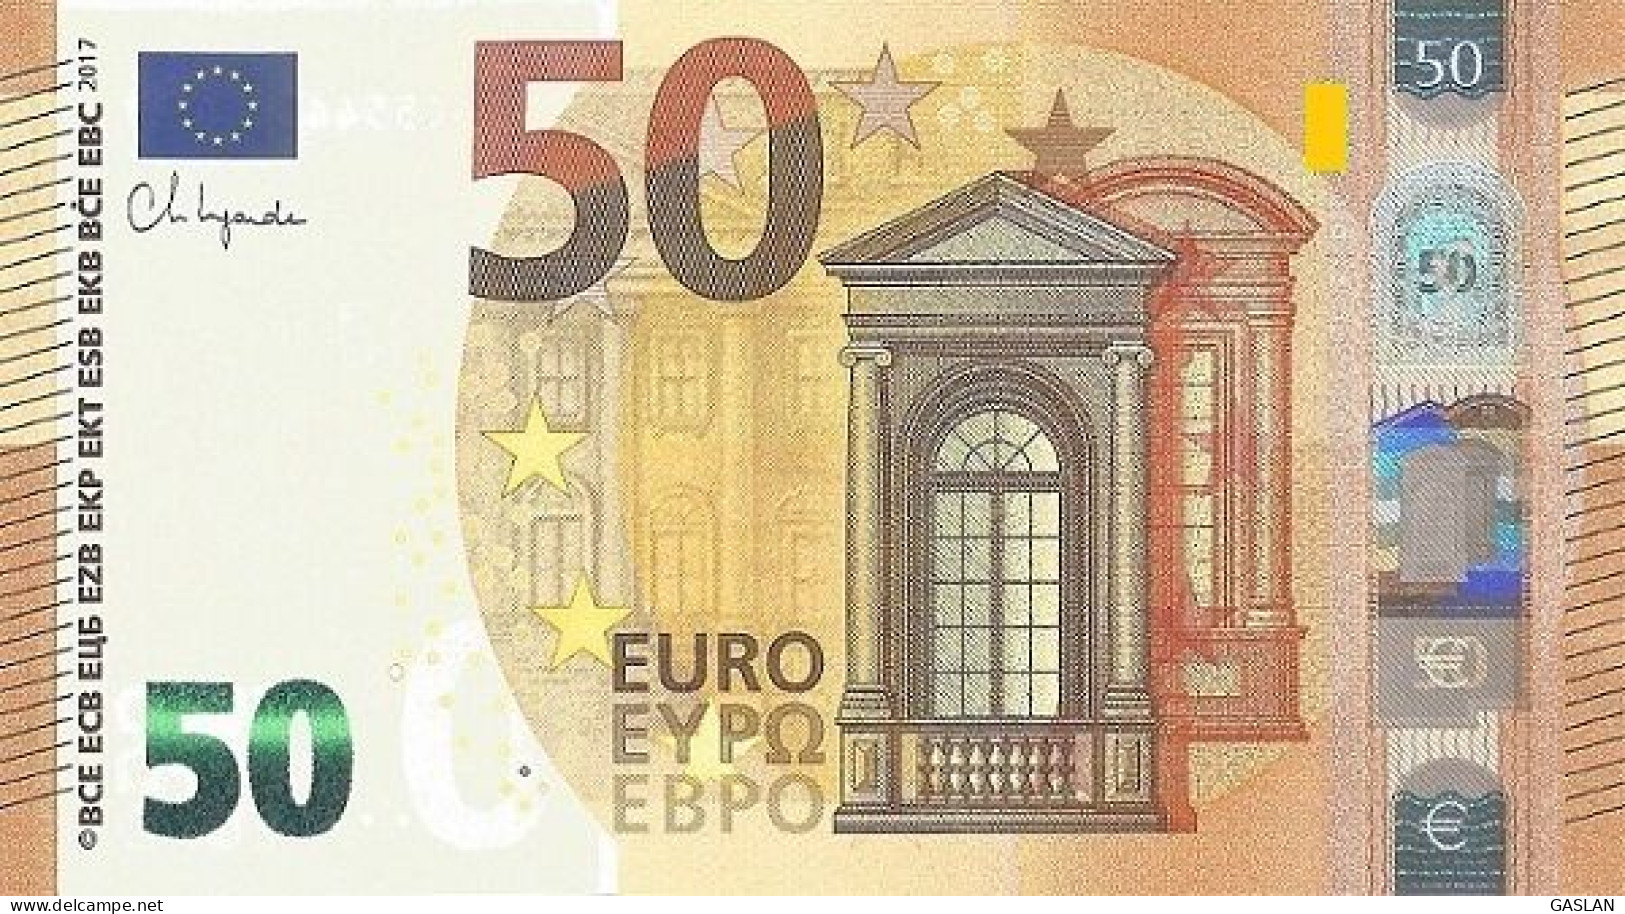 SPAIN 50 VB V018 A1 UNC LAGARDE - 50 Euro